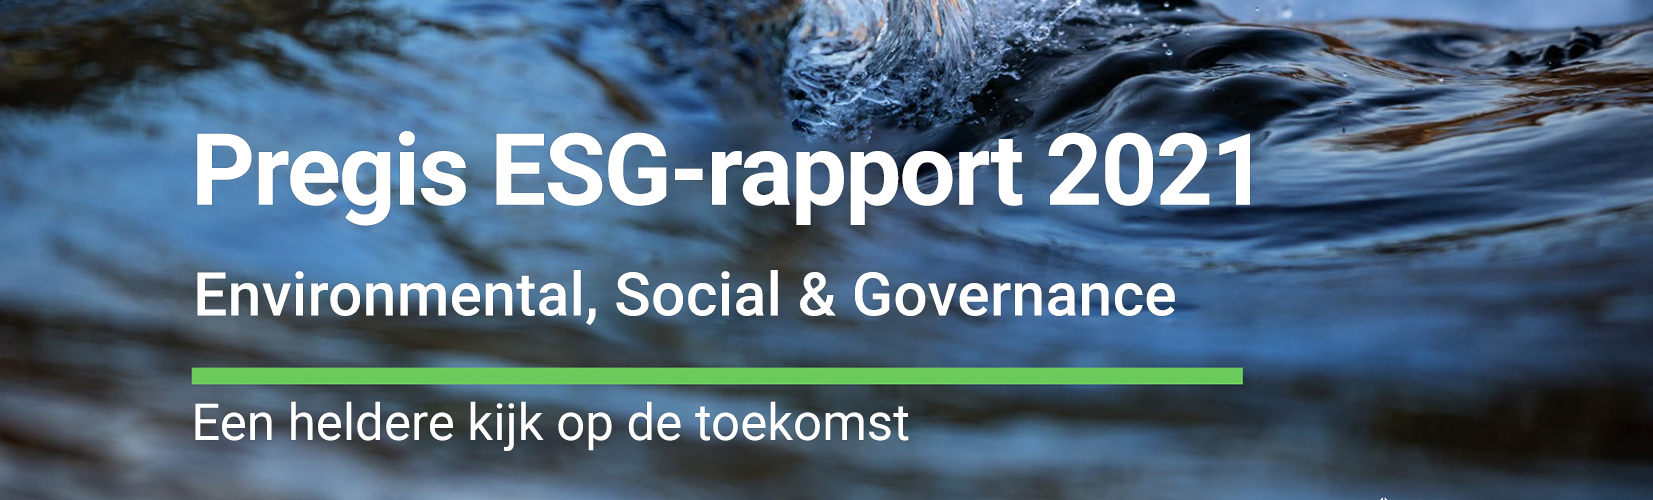 Pregis ESG-rapport 2021